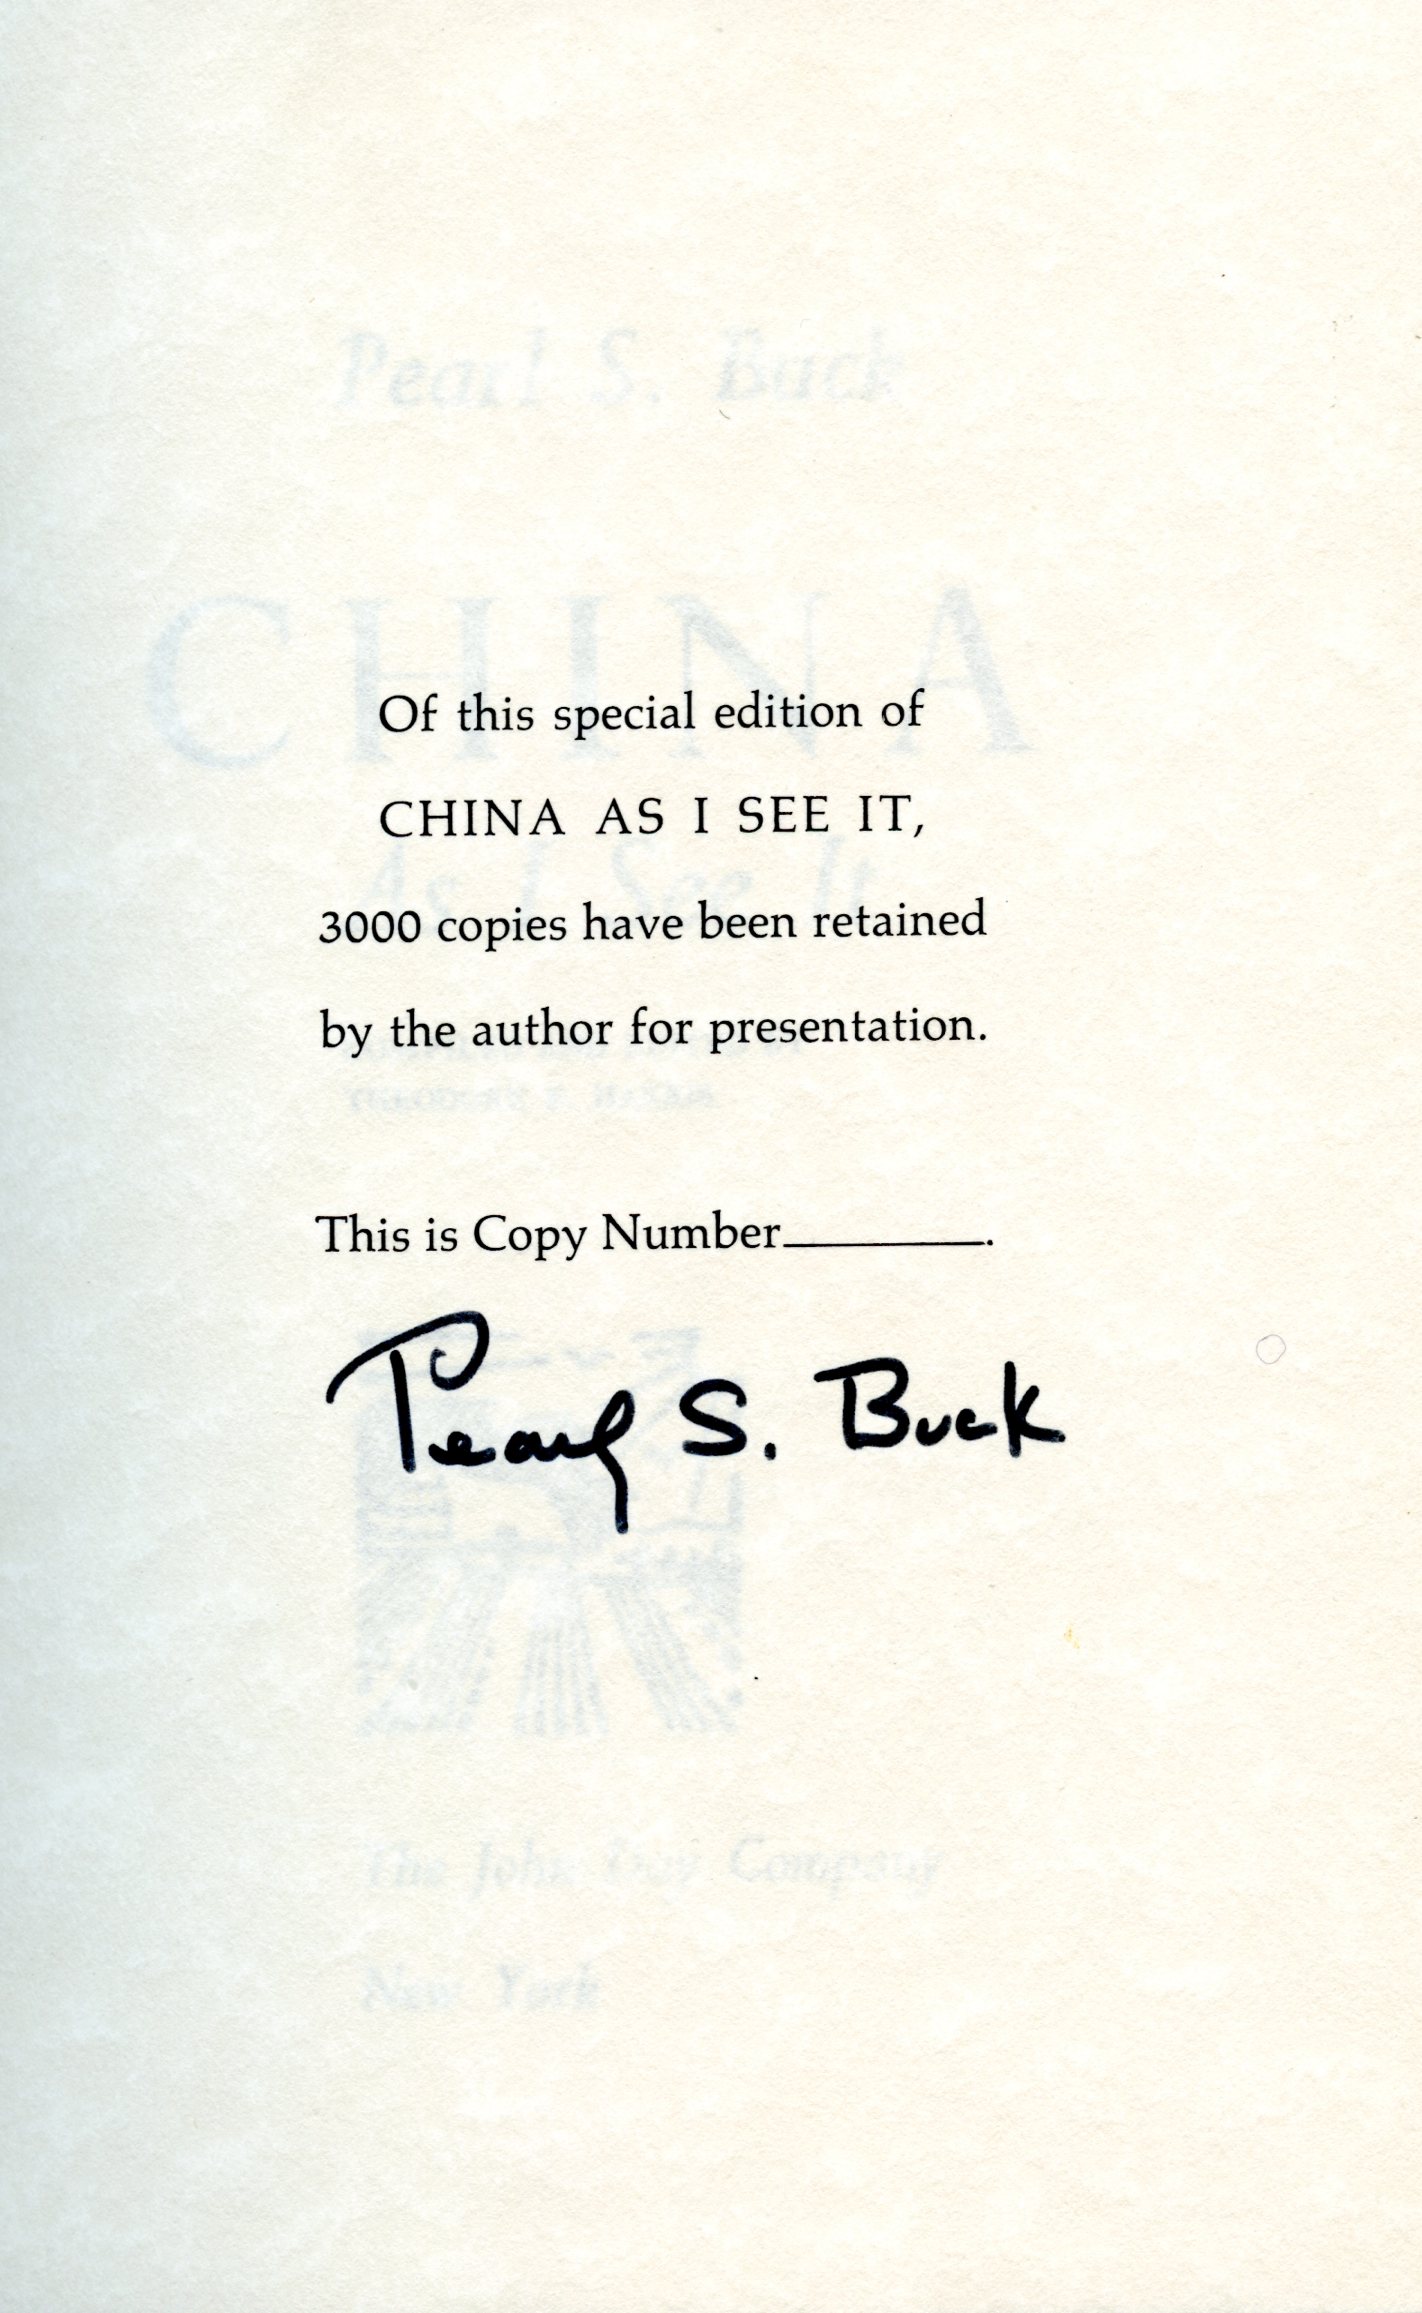 Pearl Buck handtekening001